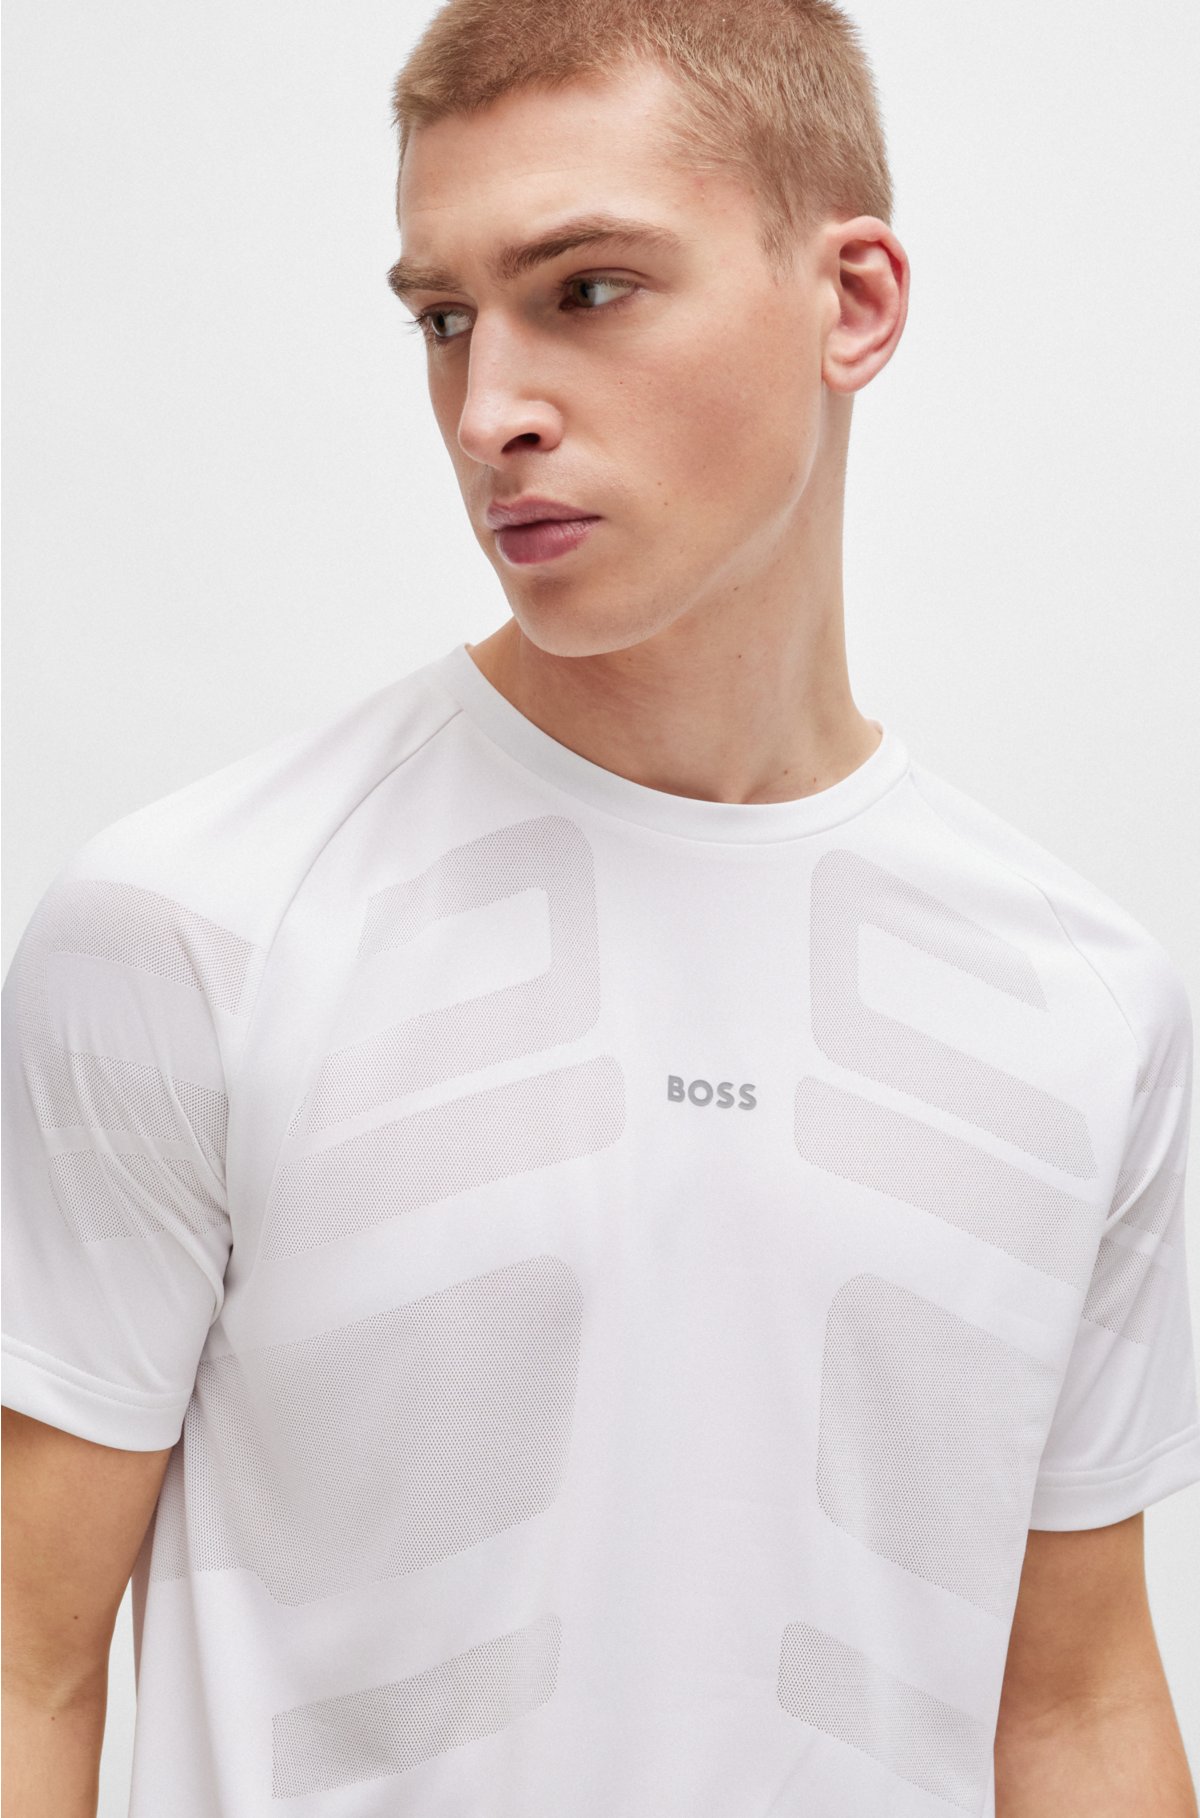 Performance-jacquard T-shirt with decorative reflective logo, White